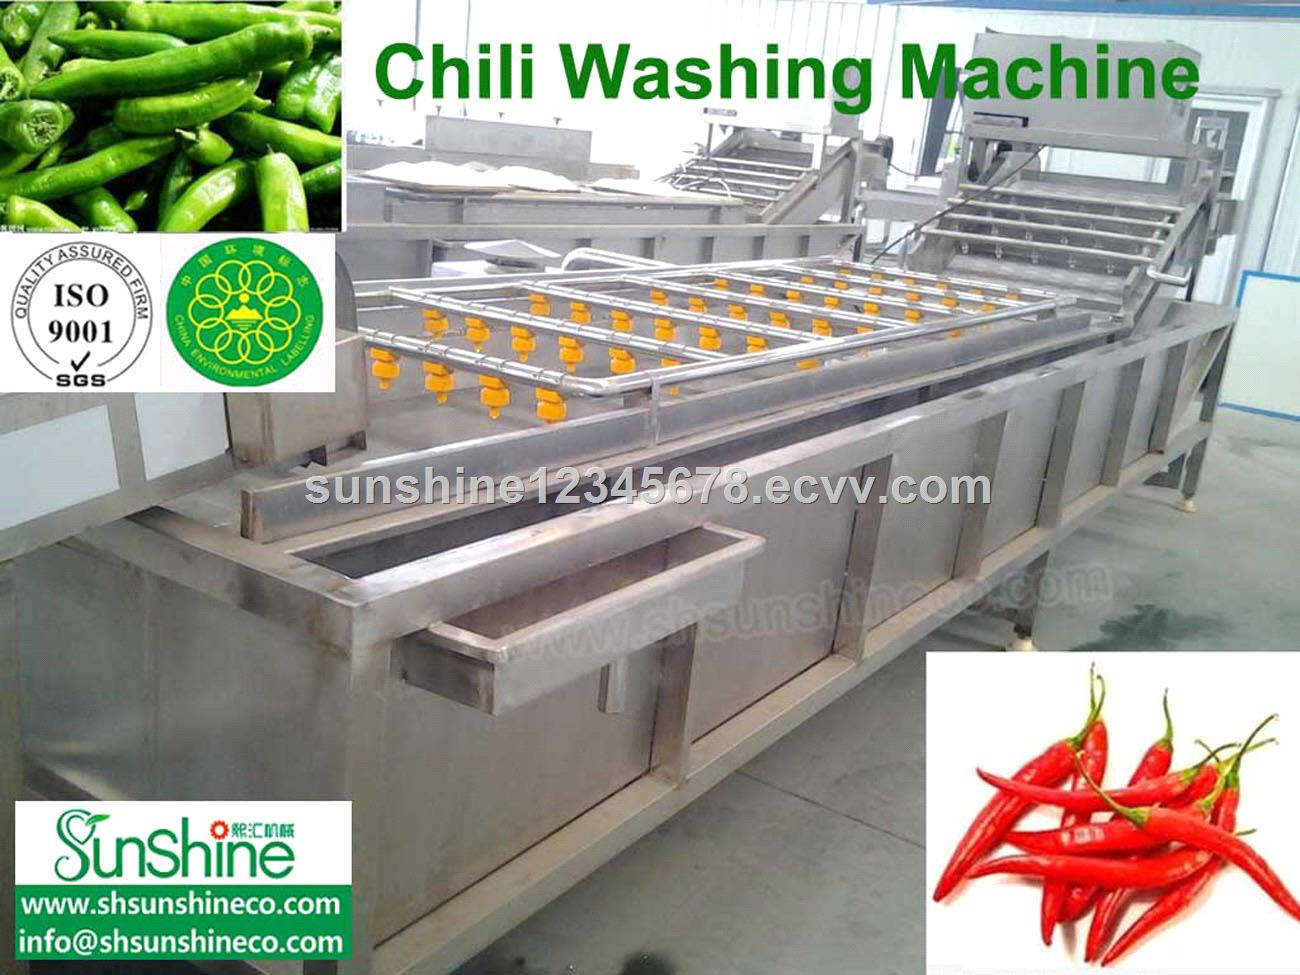 Chili Washing MachineChili WasherChili Process 304 stainless steel in wooden case